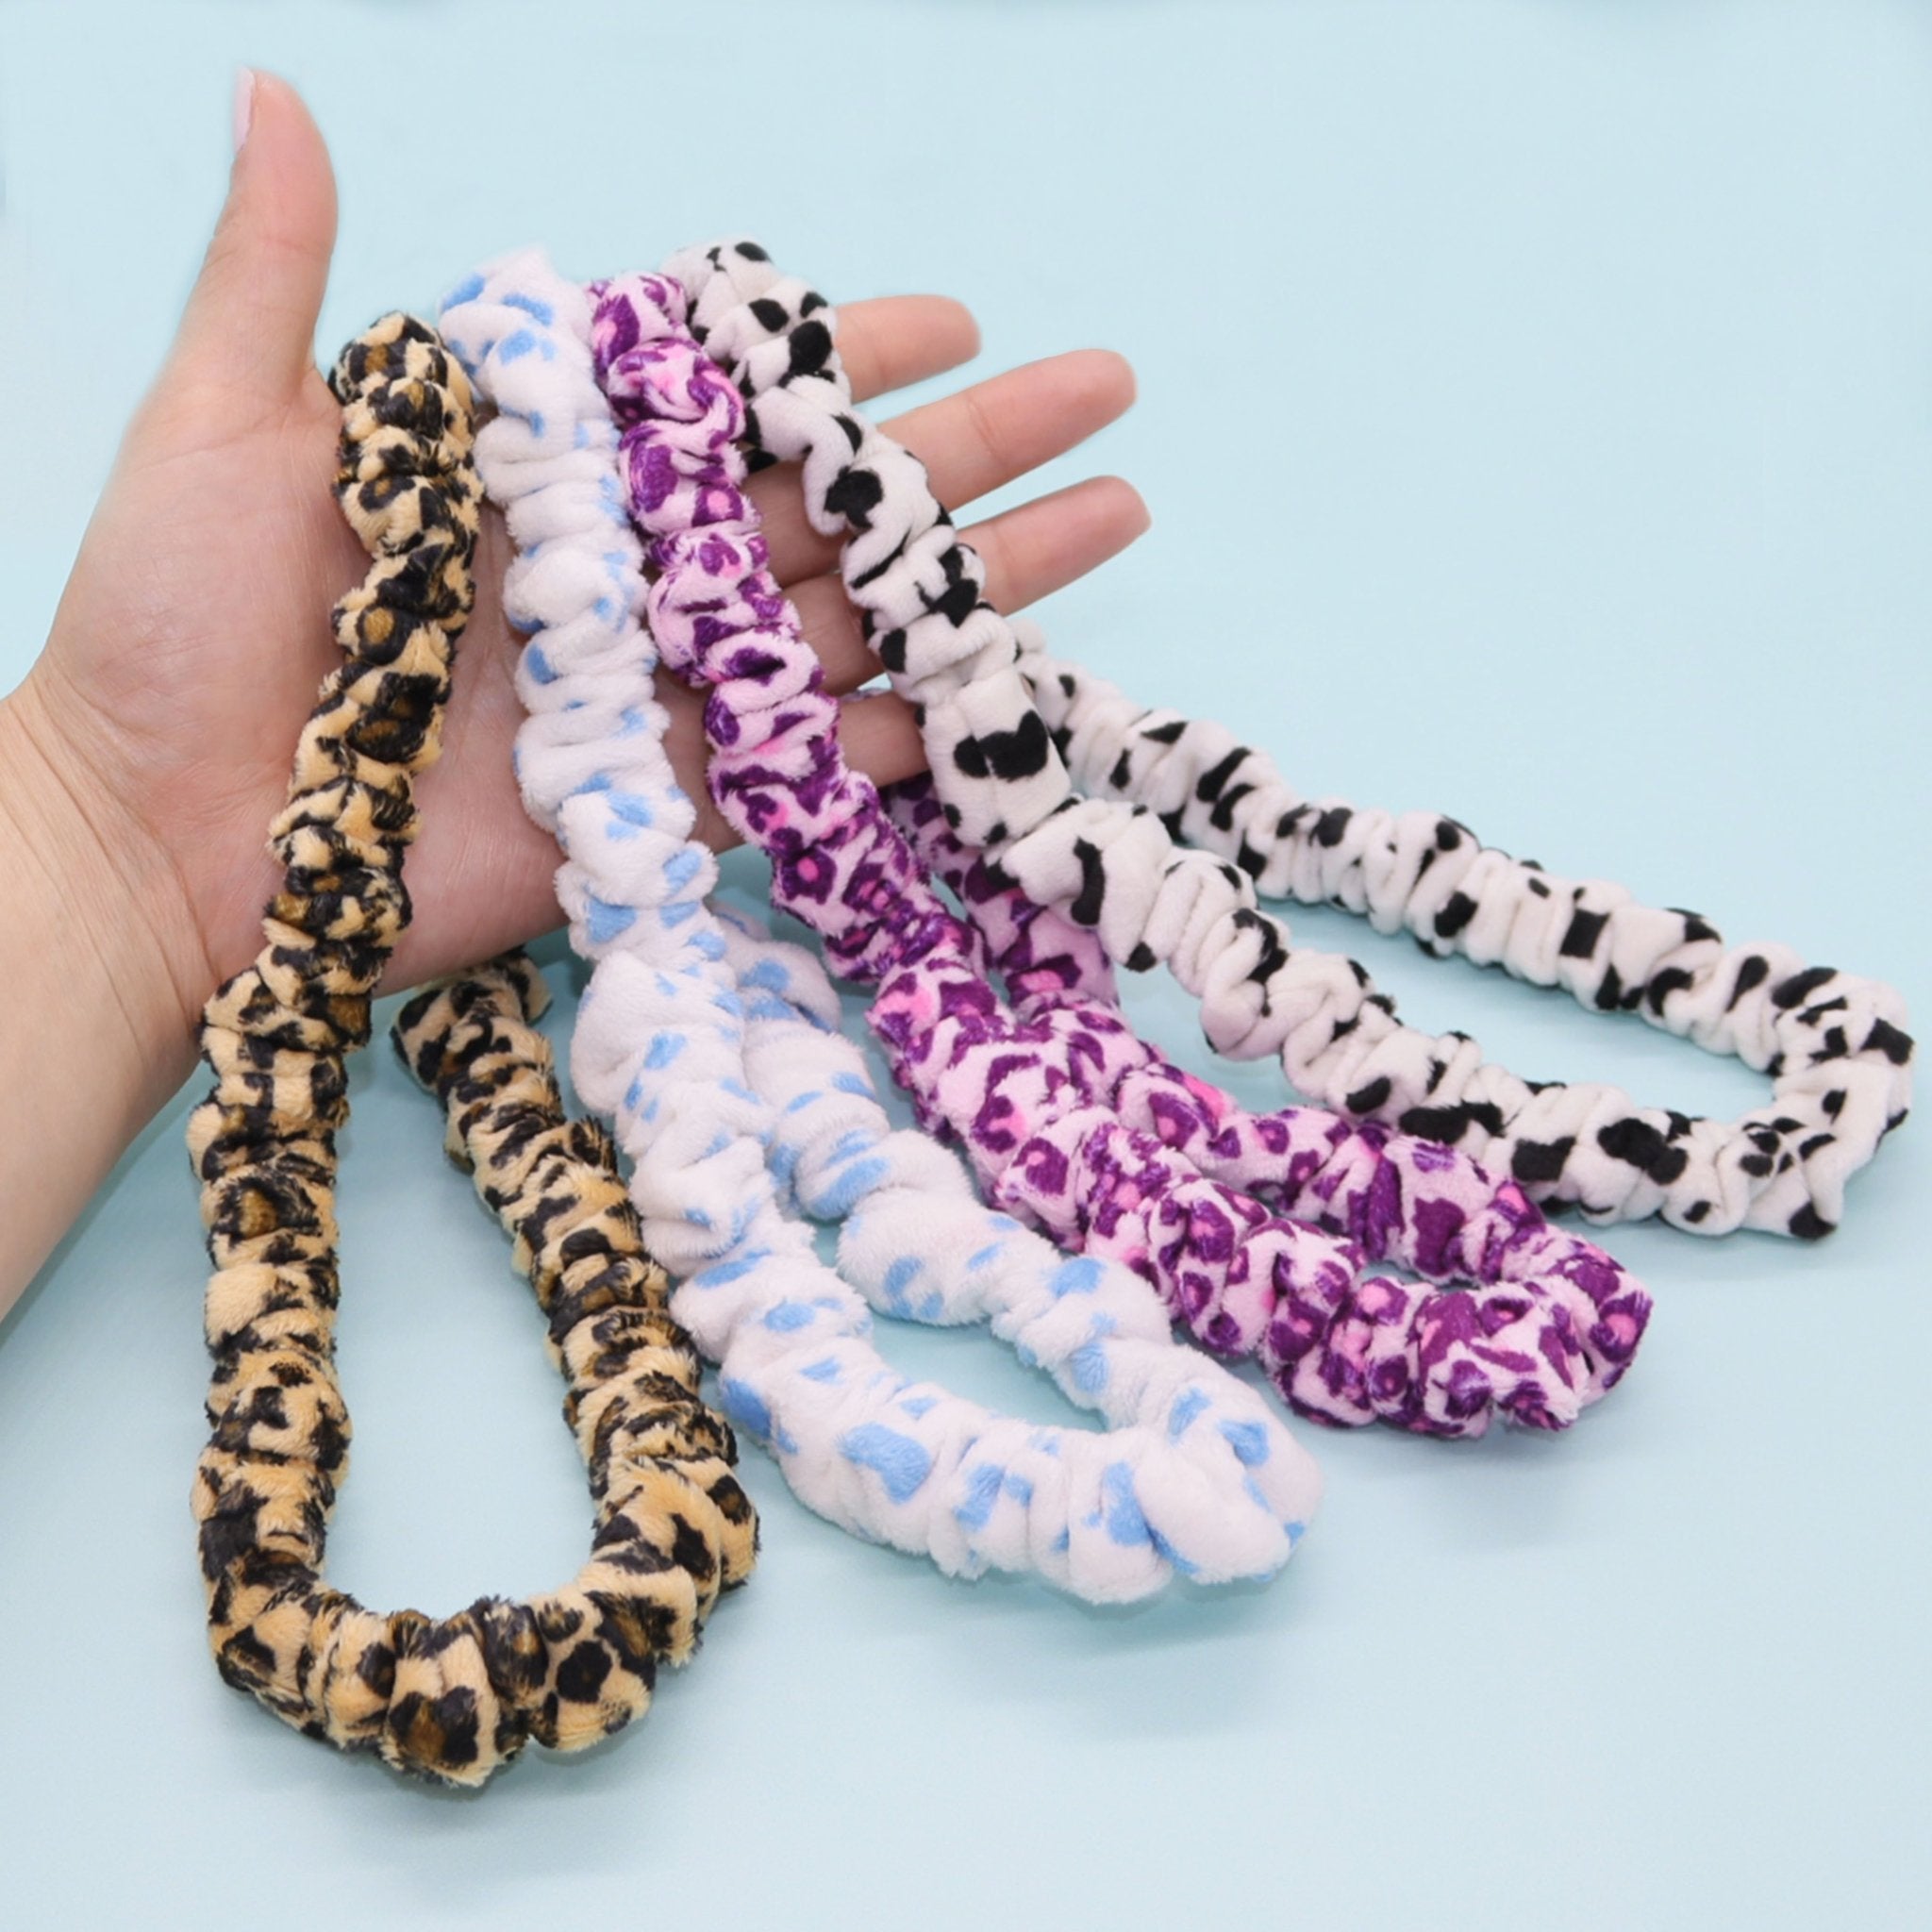 Animal Print Scrunchie Headbands - 4 Pack Cheetah & Cow - FROG SAC